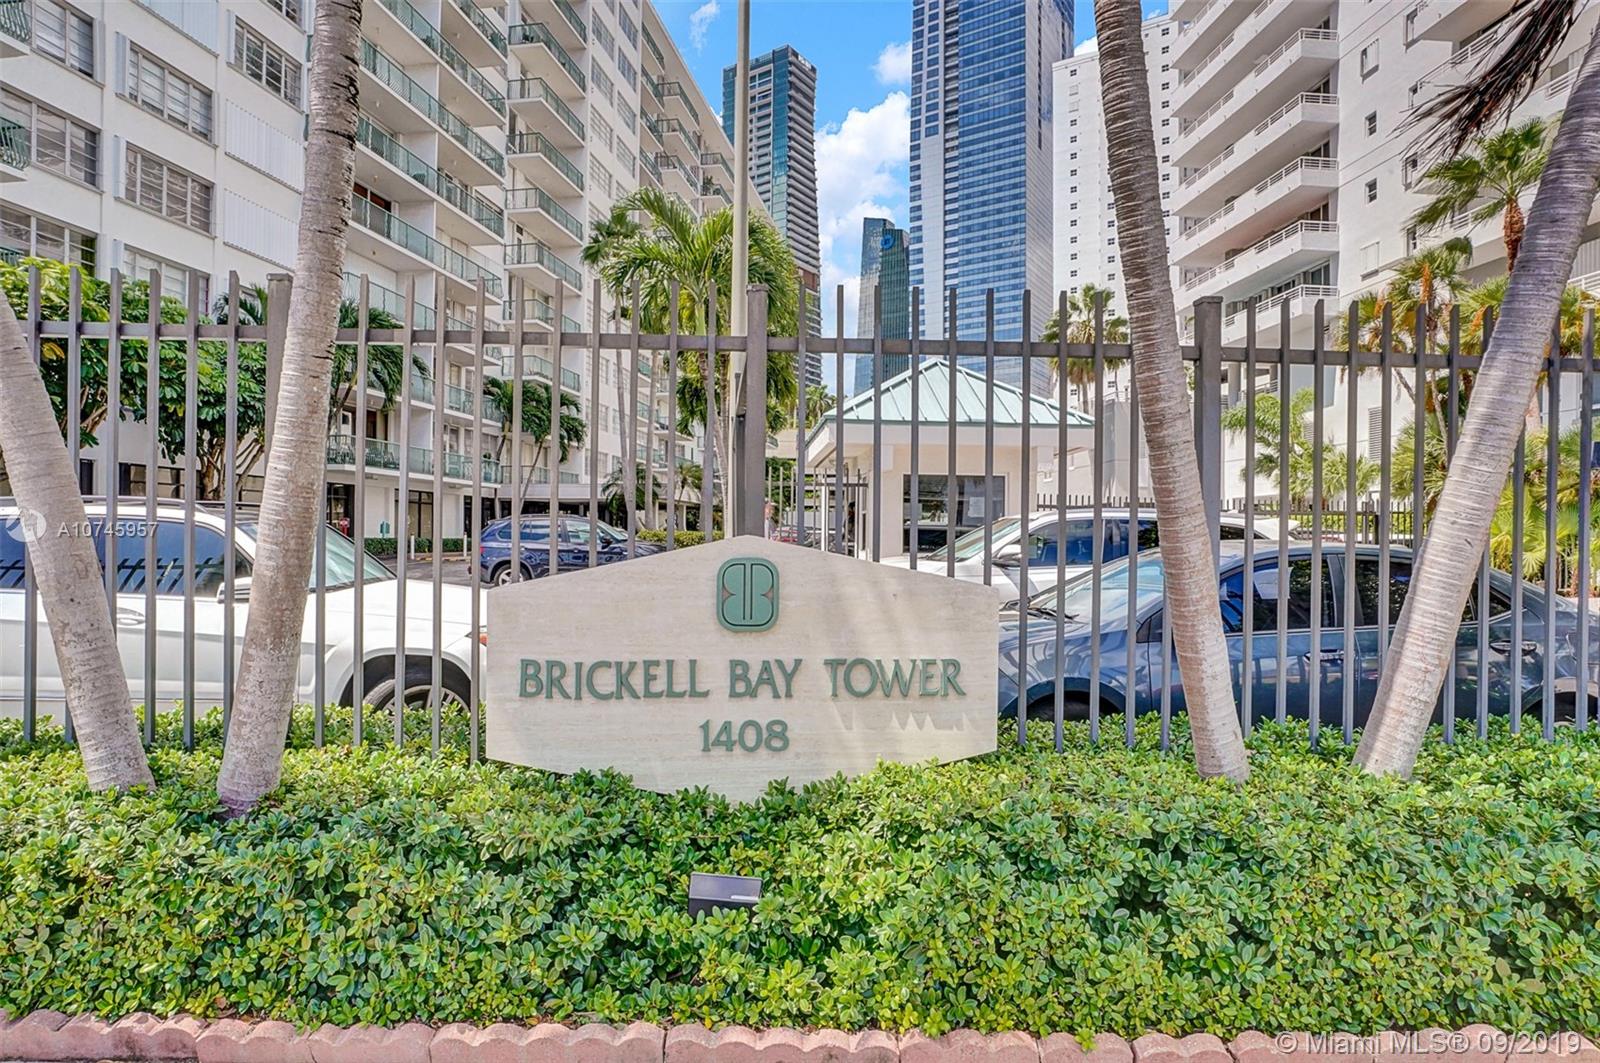 Brickell Bay Tower image #3